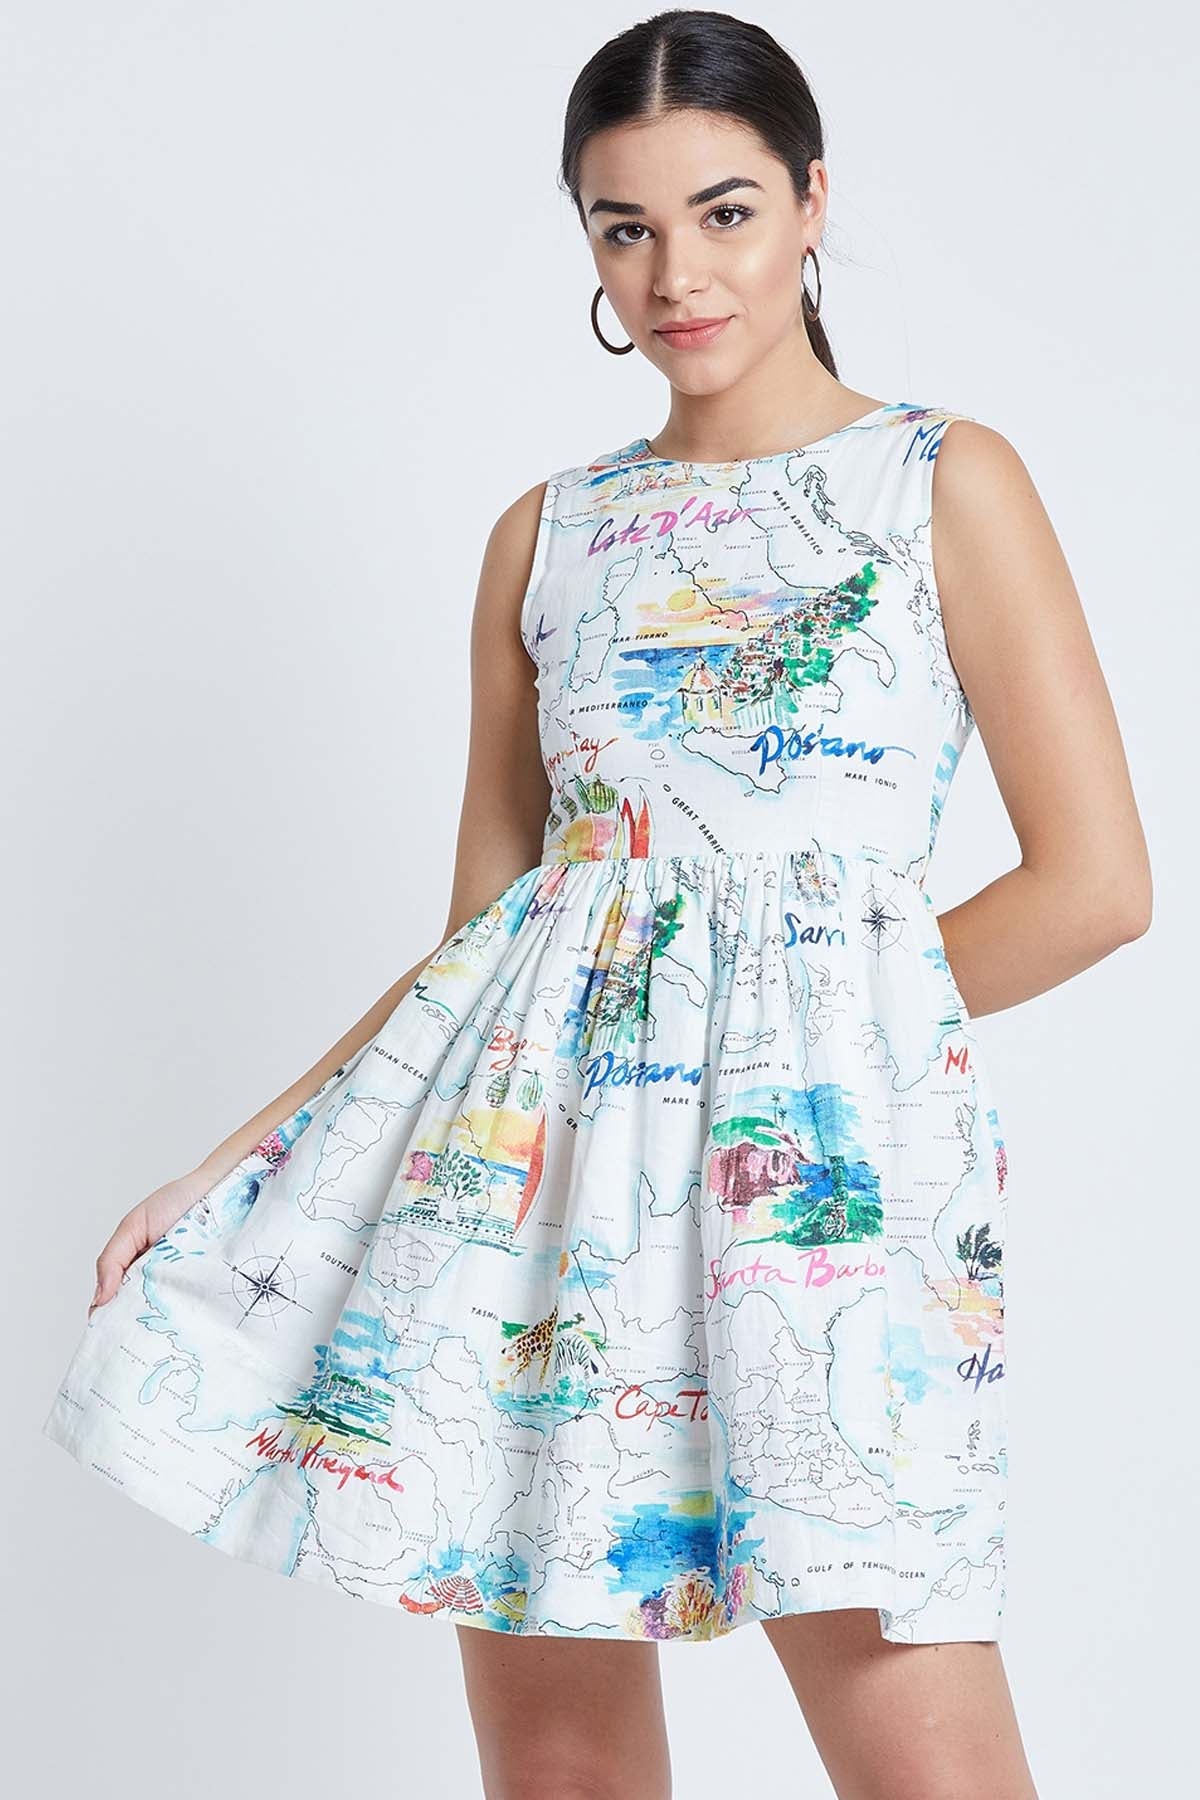 Bohobi White Cotton Printed Dress For Women Online at ScrollnShops